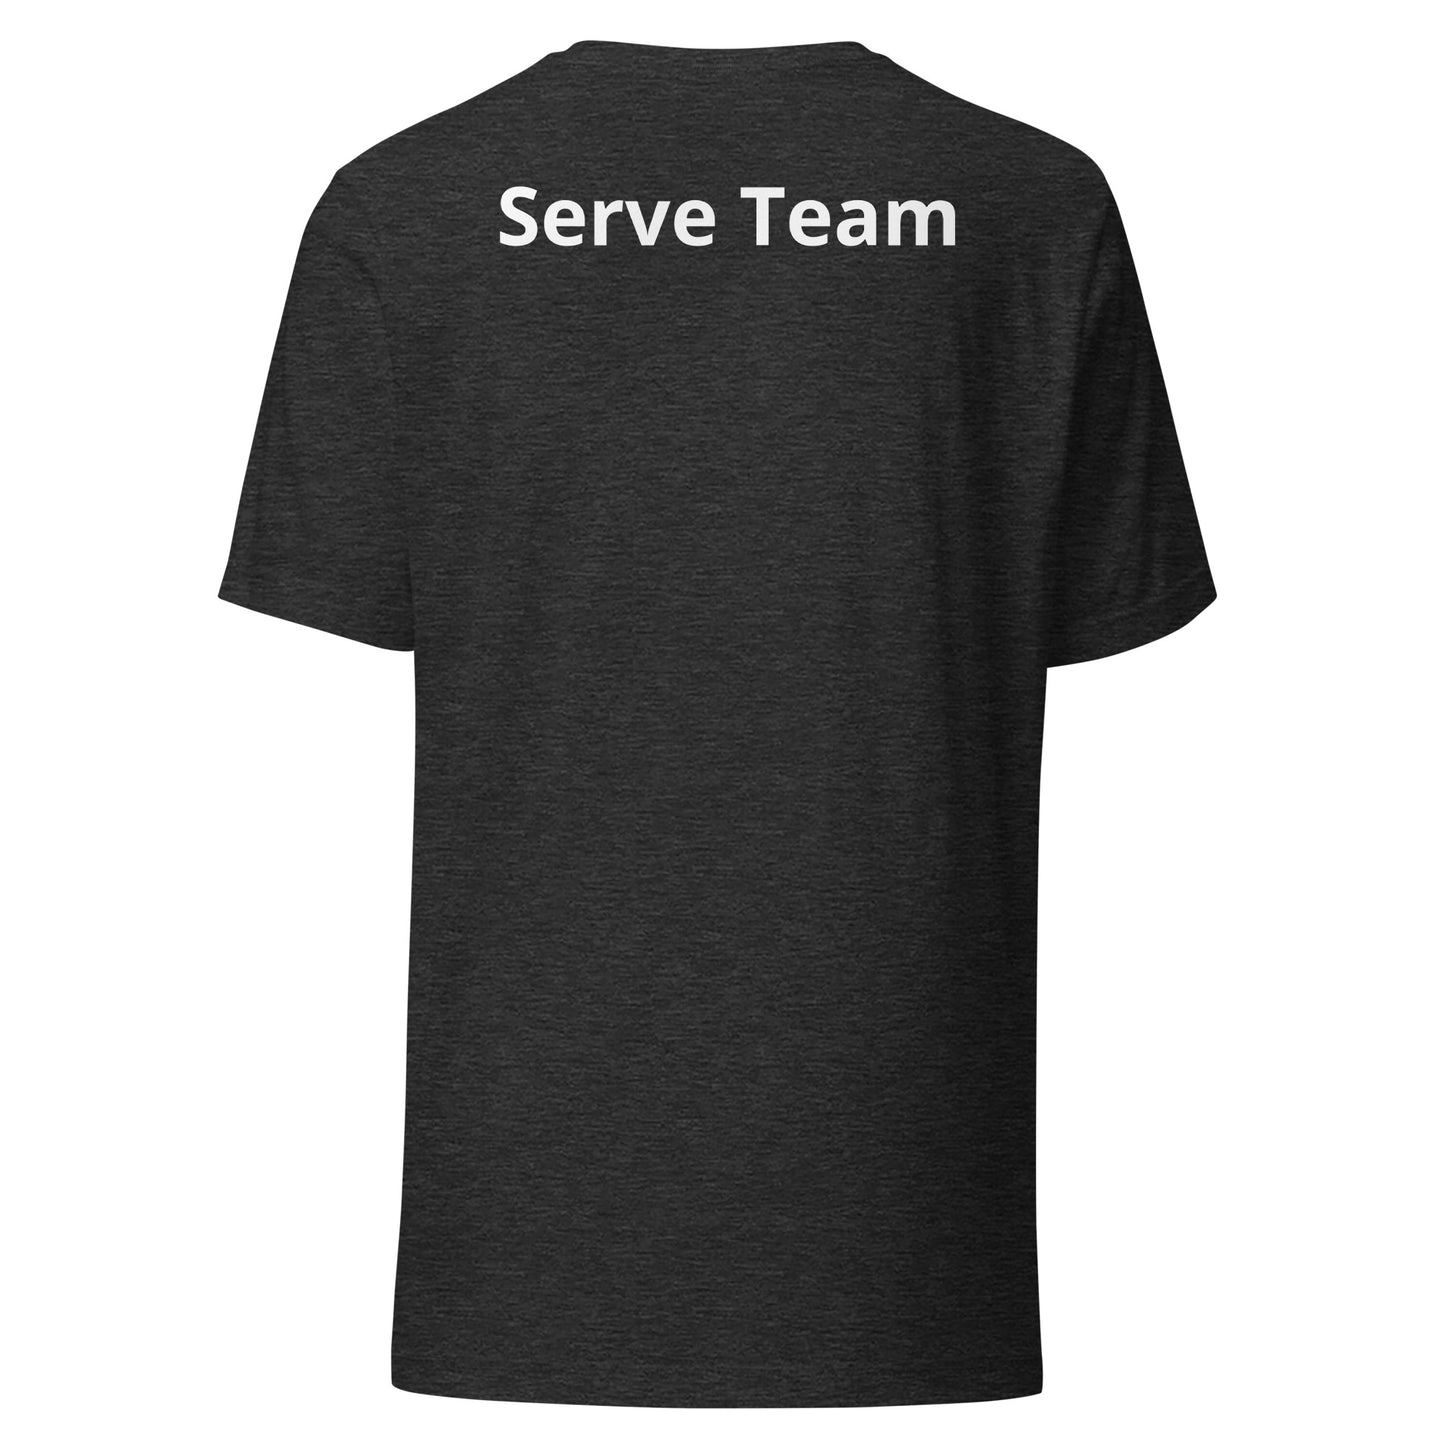 Serve Team t-shirt - Option 2